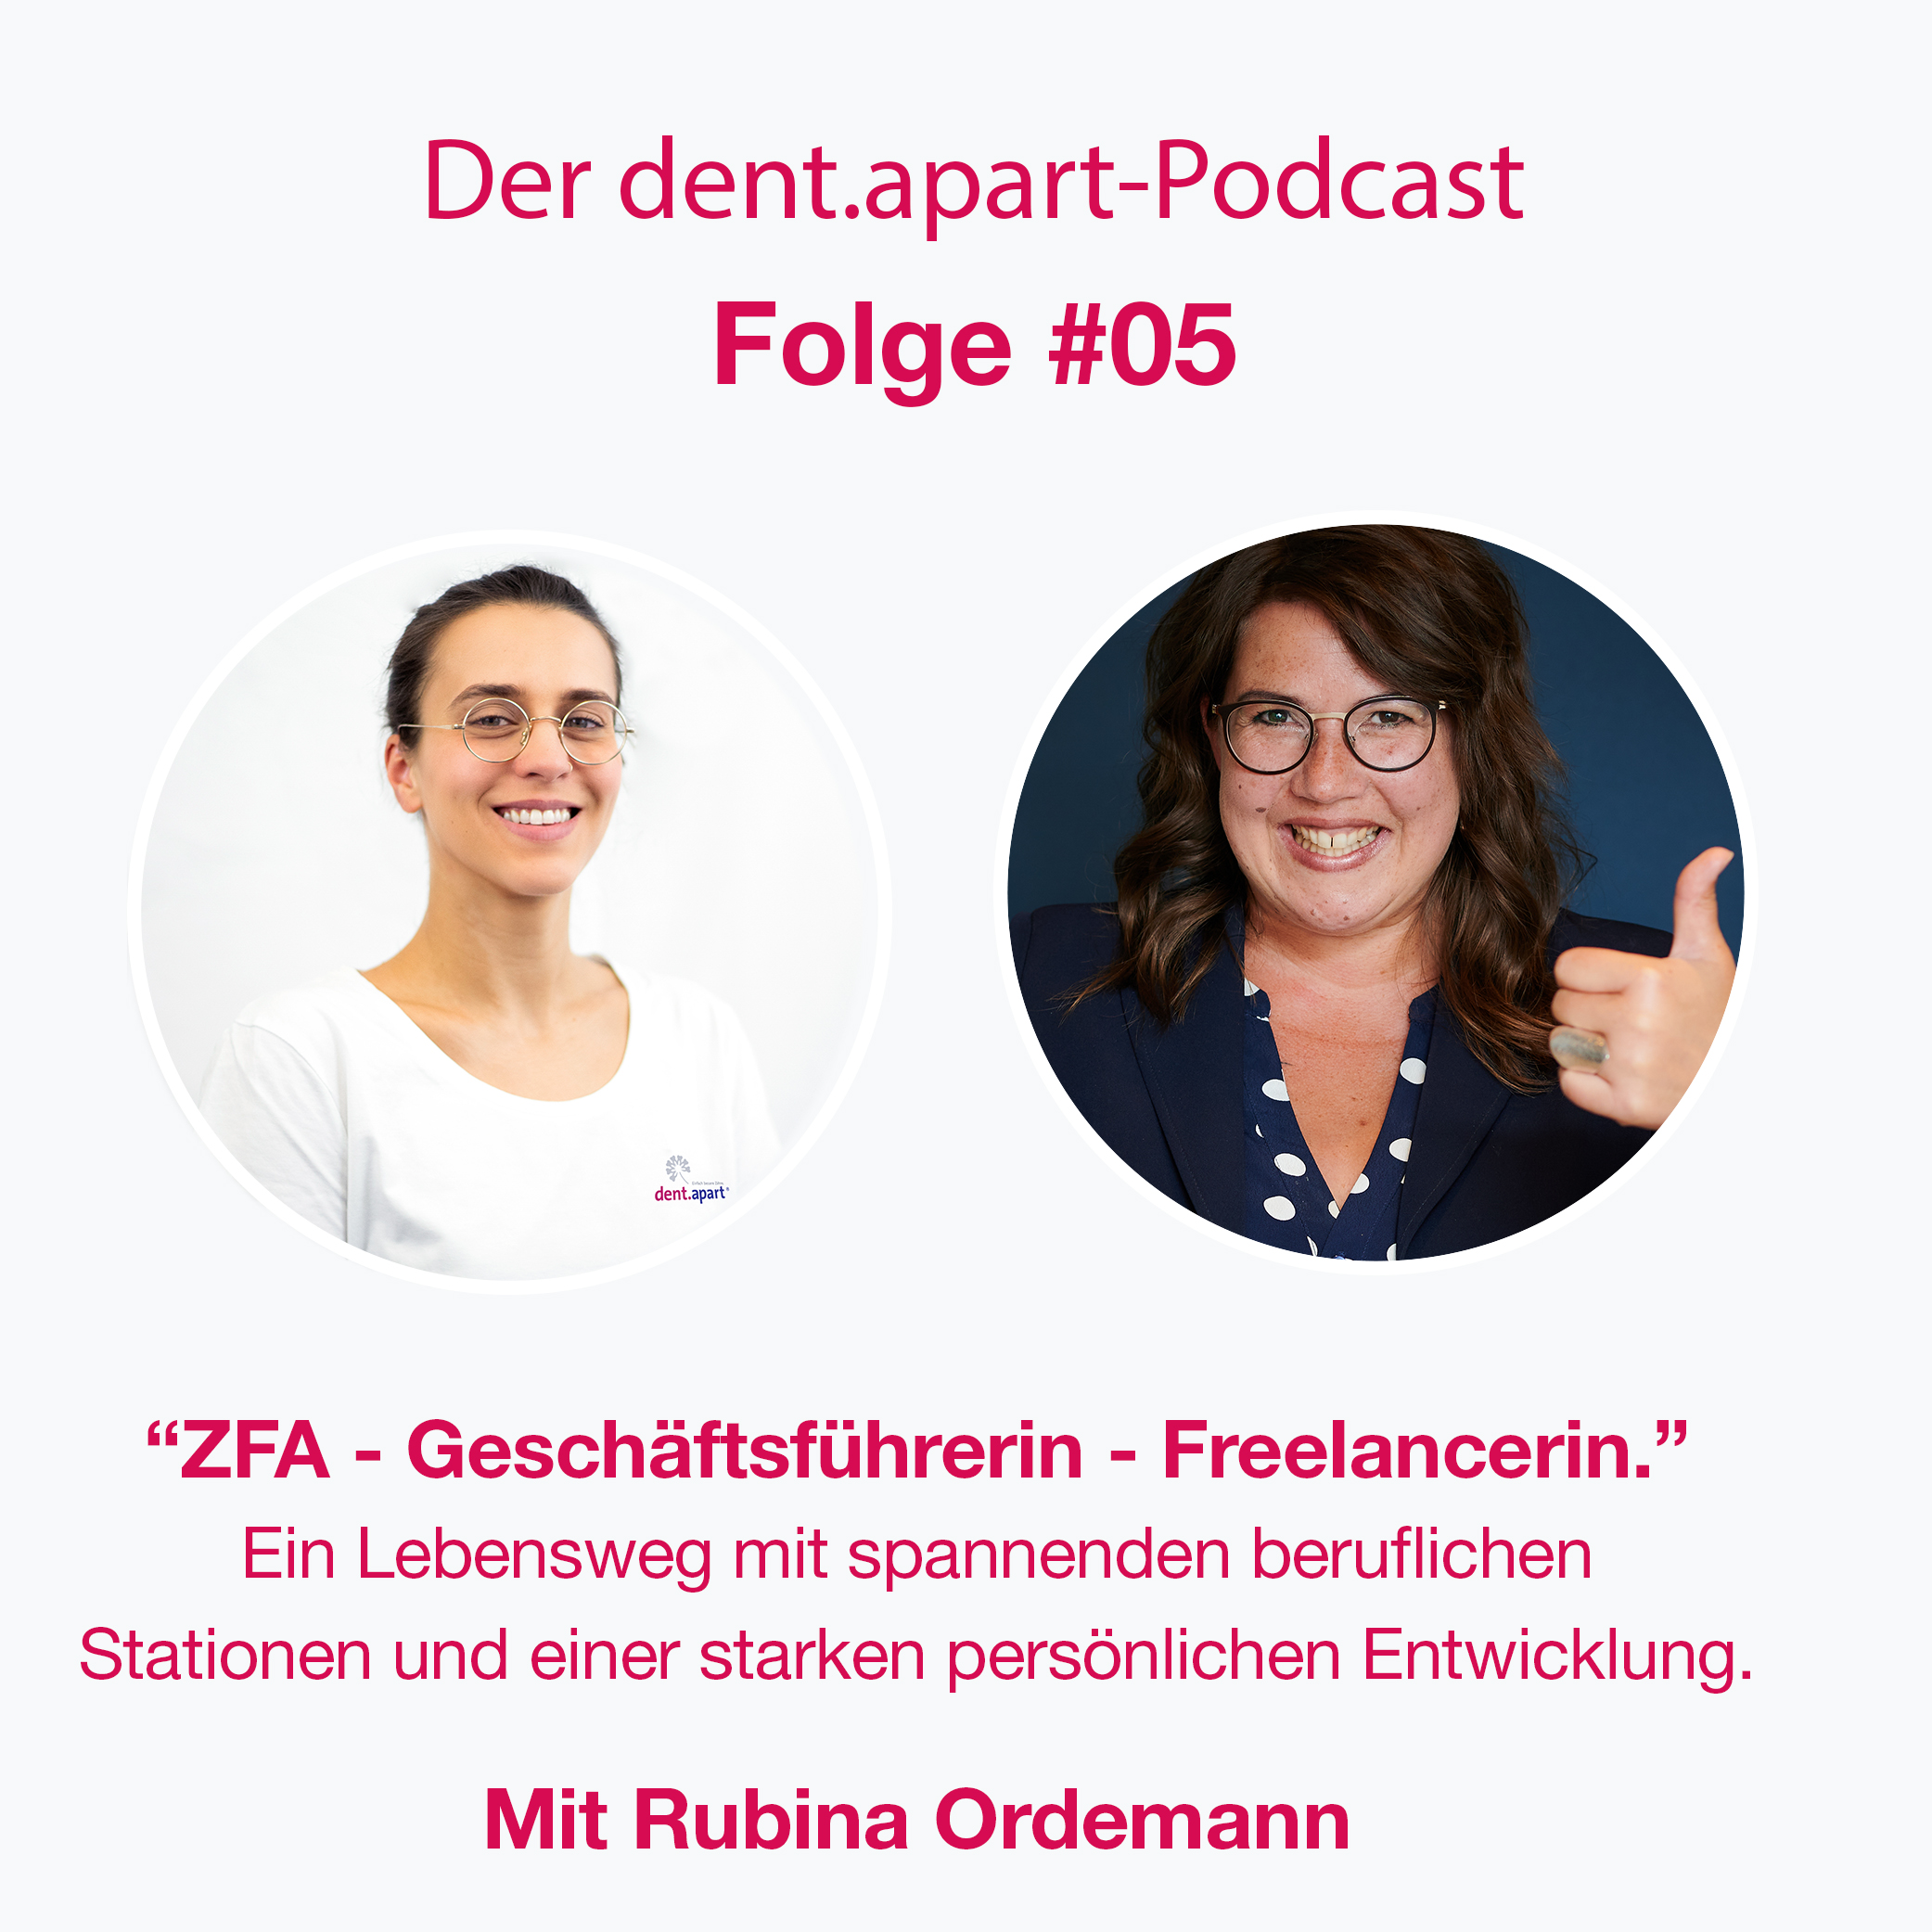 Der dent.apart-Podcast-Folge #05 mit Rubina Ordermann